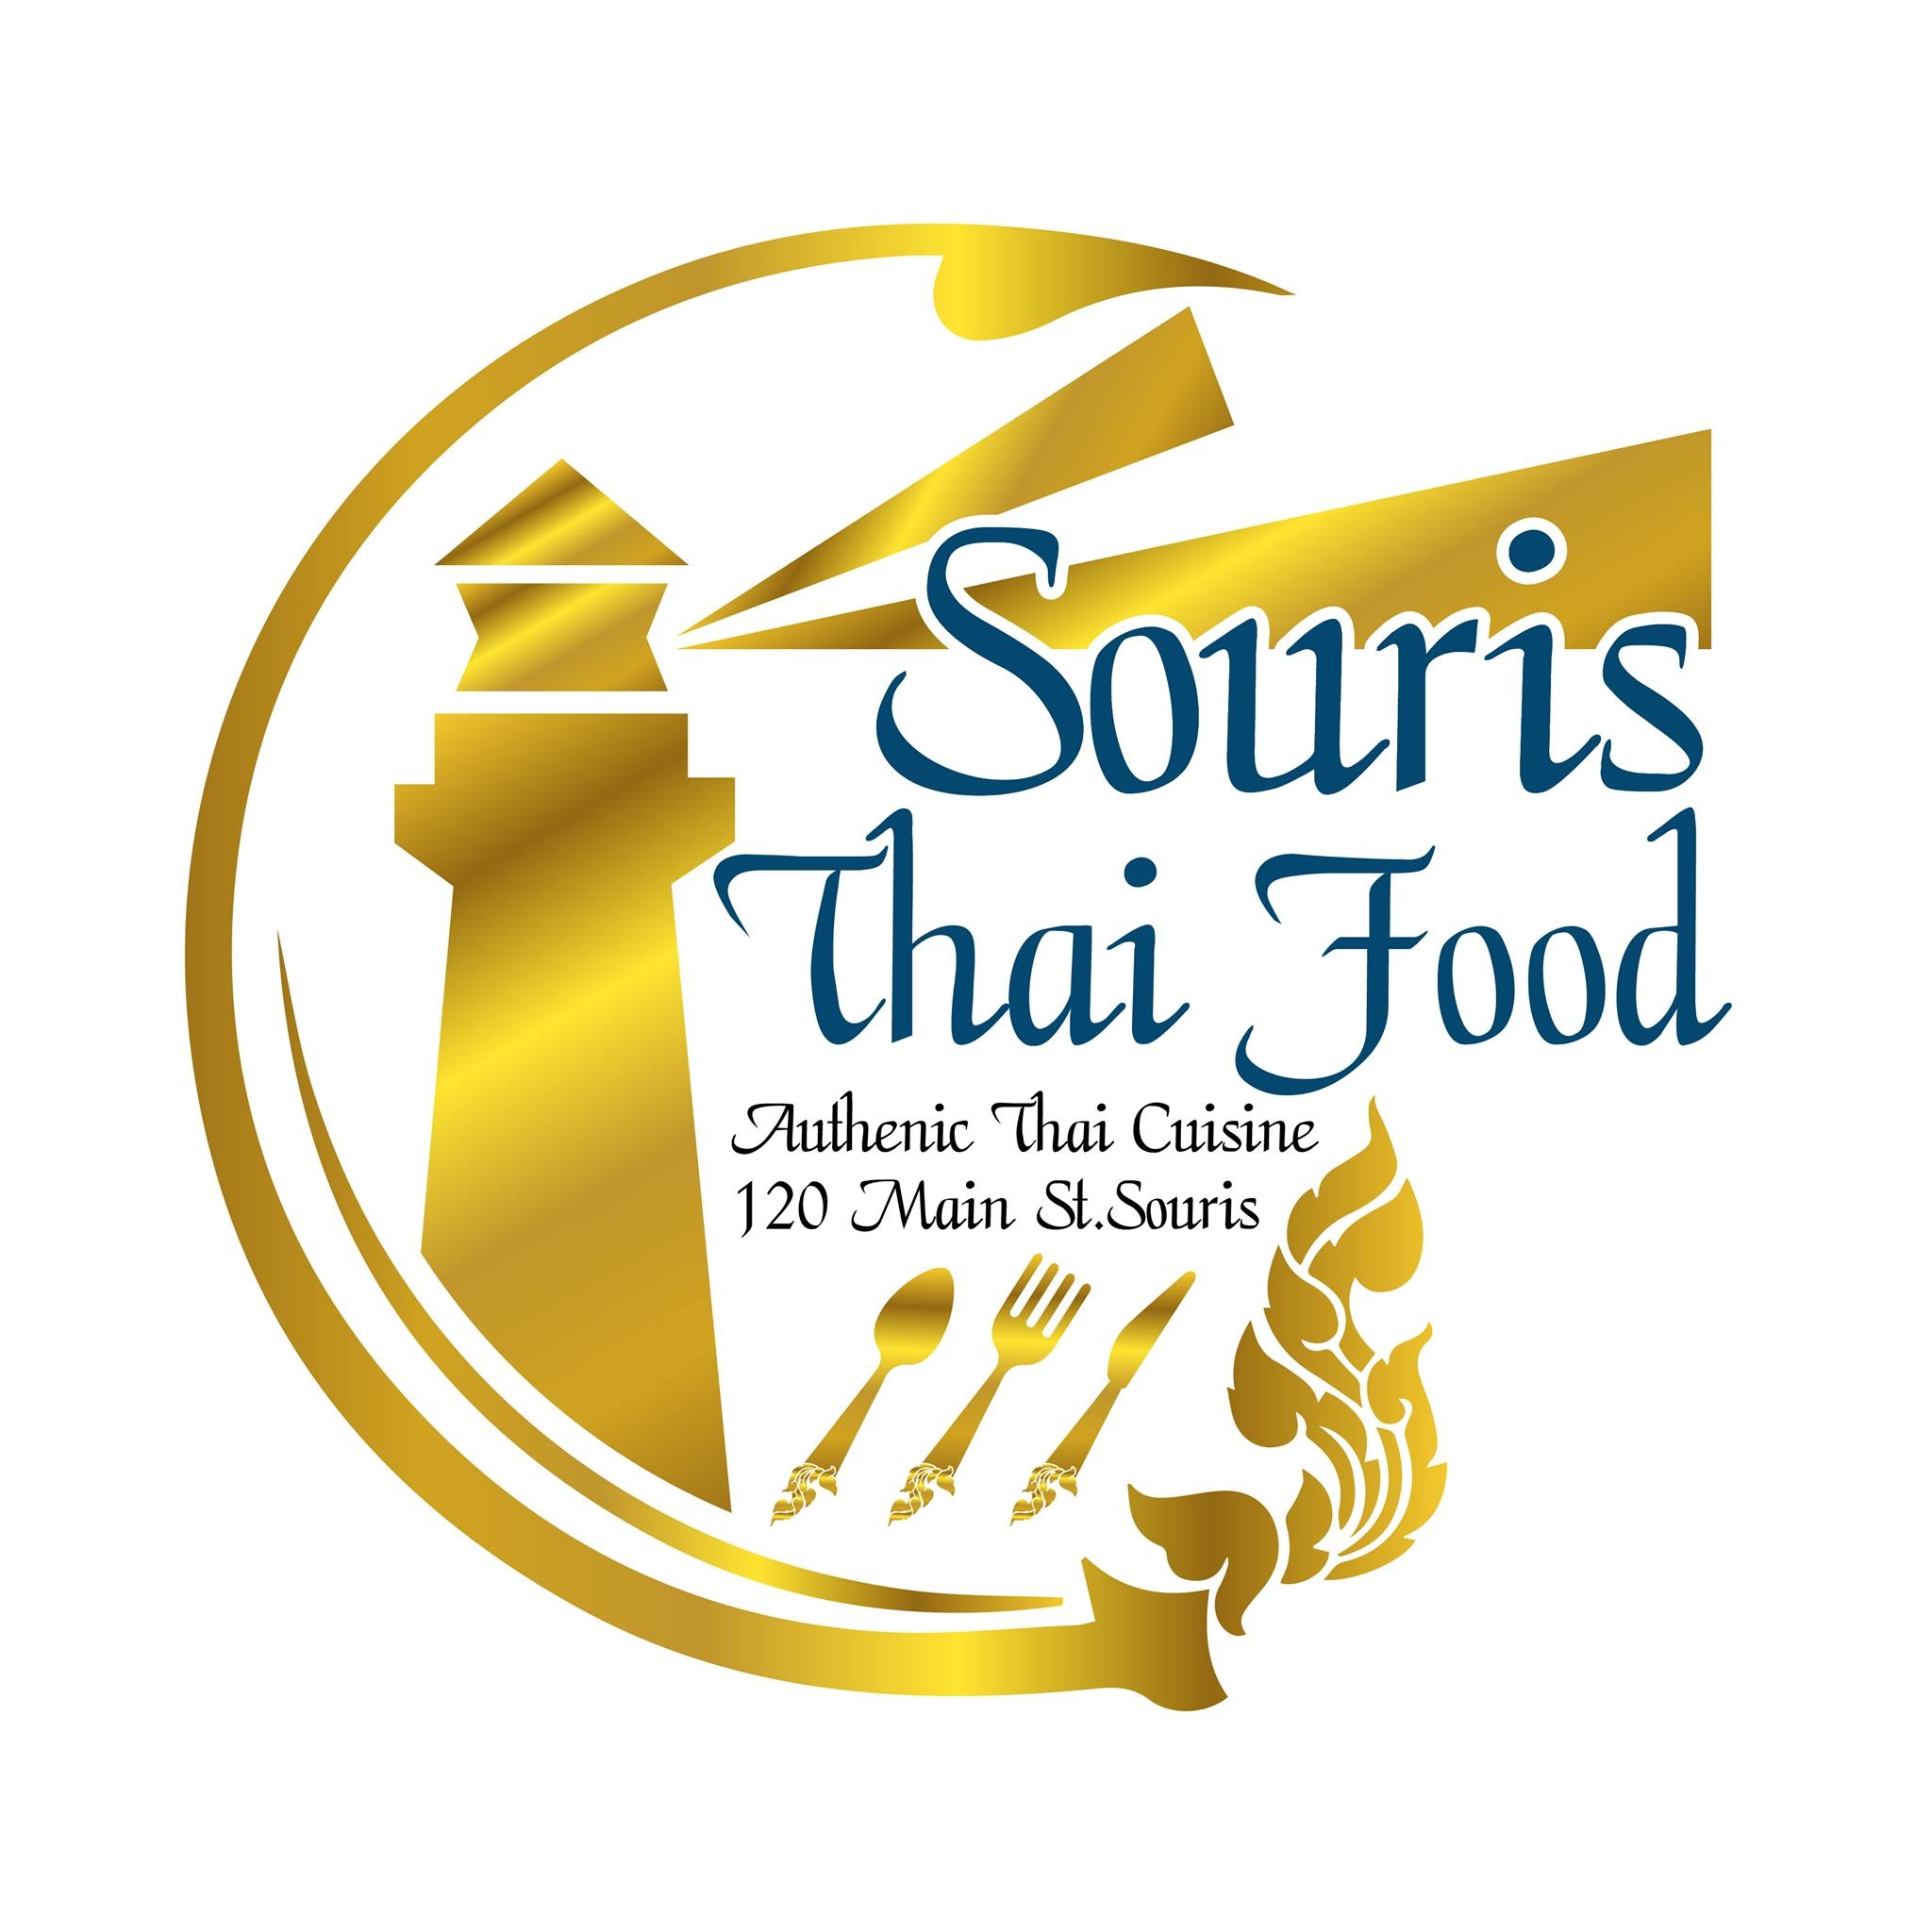 SOURIS THAI FOOD